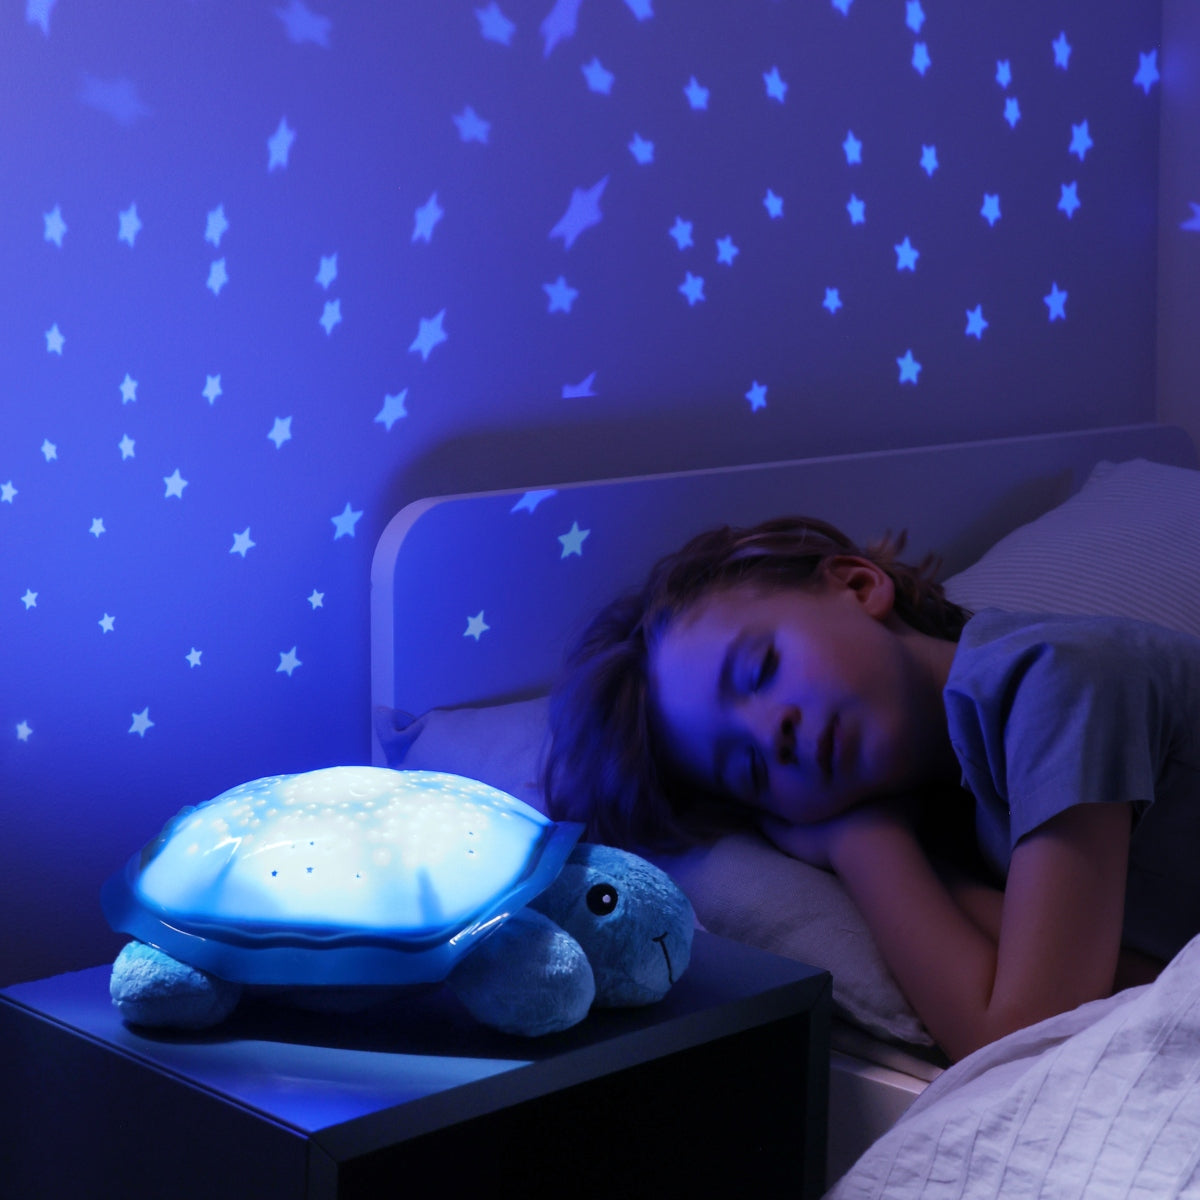 Twilight Turtle - Projecting Night Light Blue-Cloud B®-Do-Gree Generations